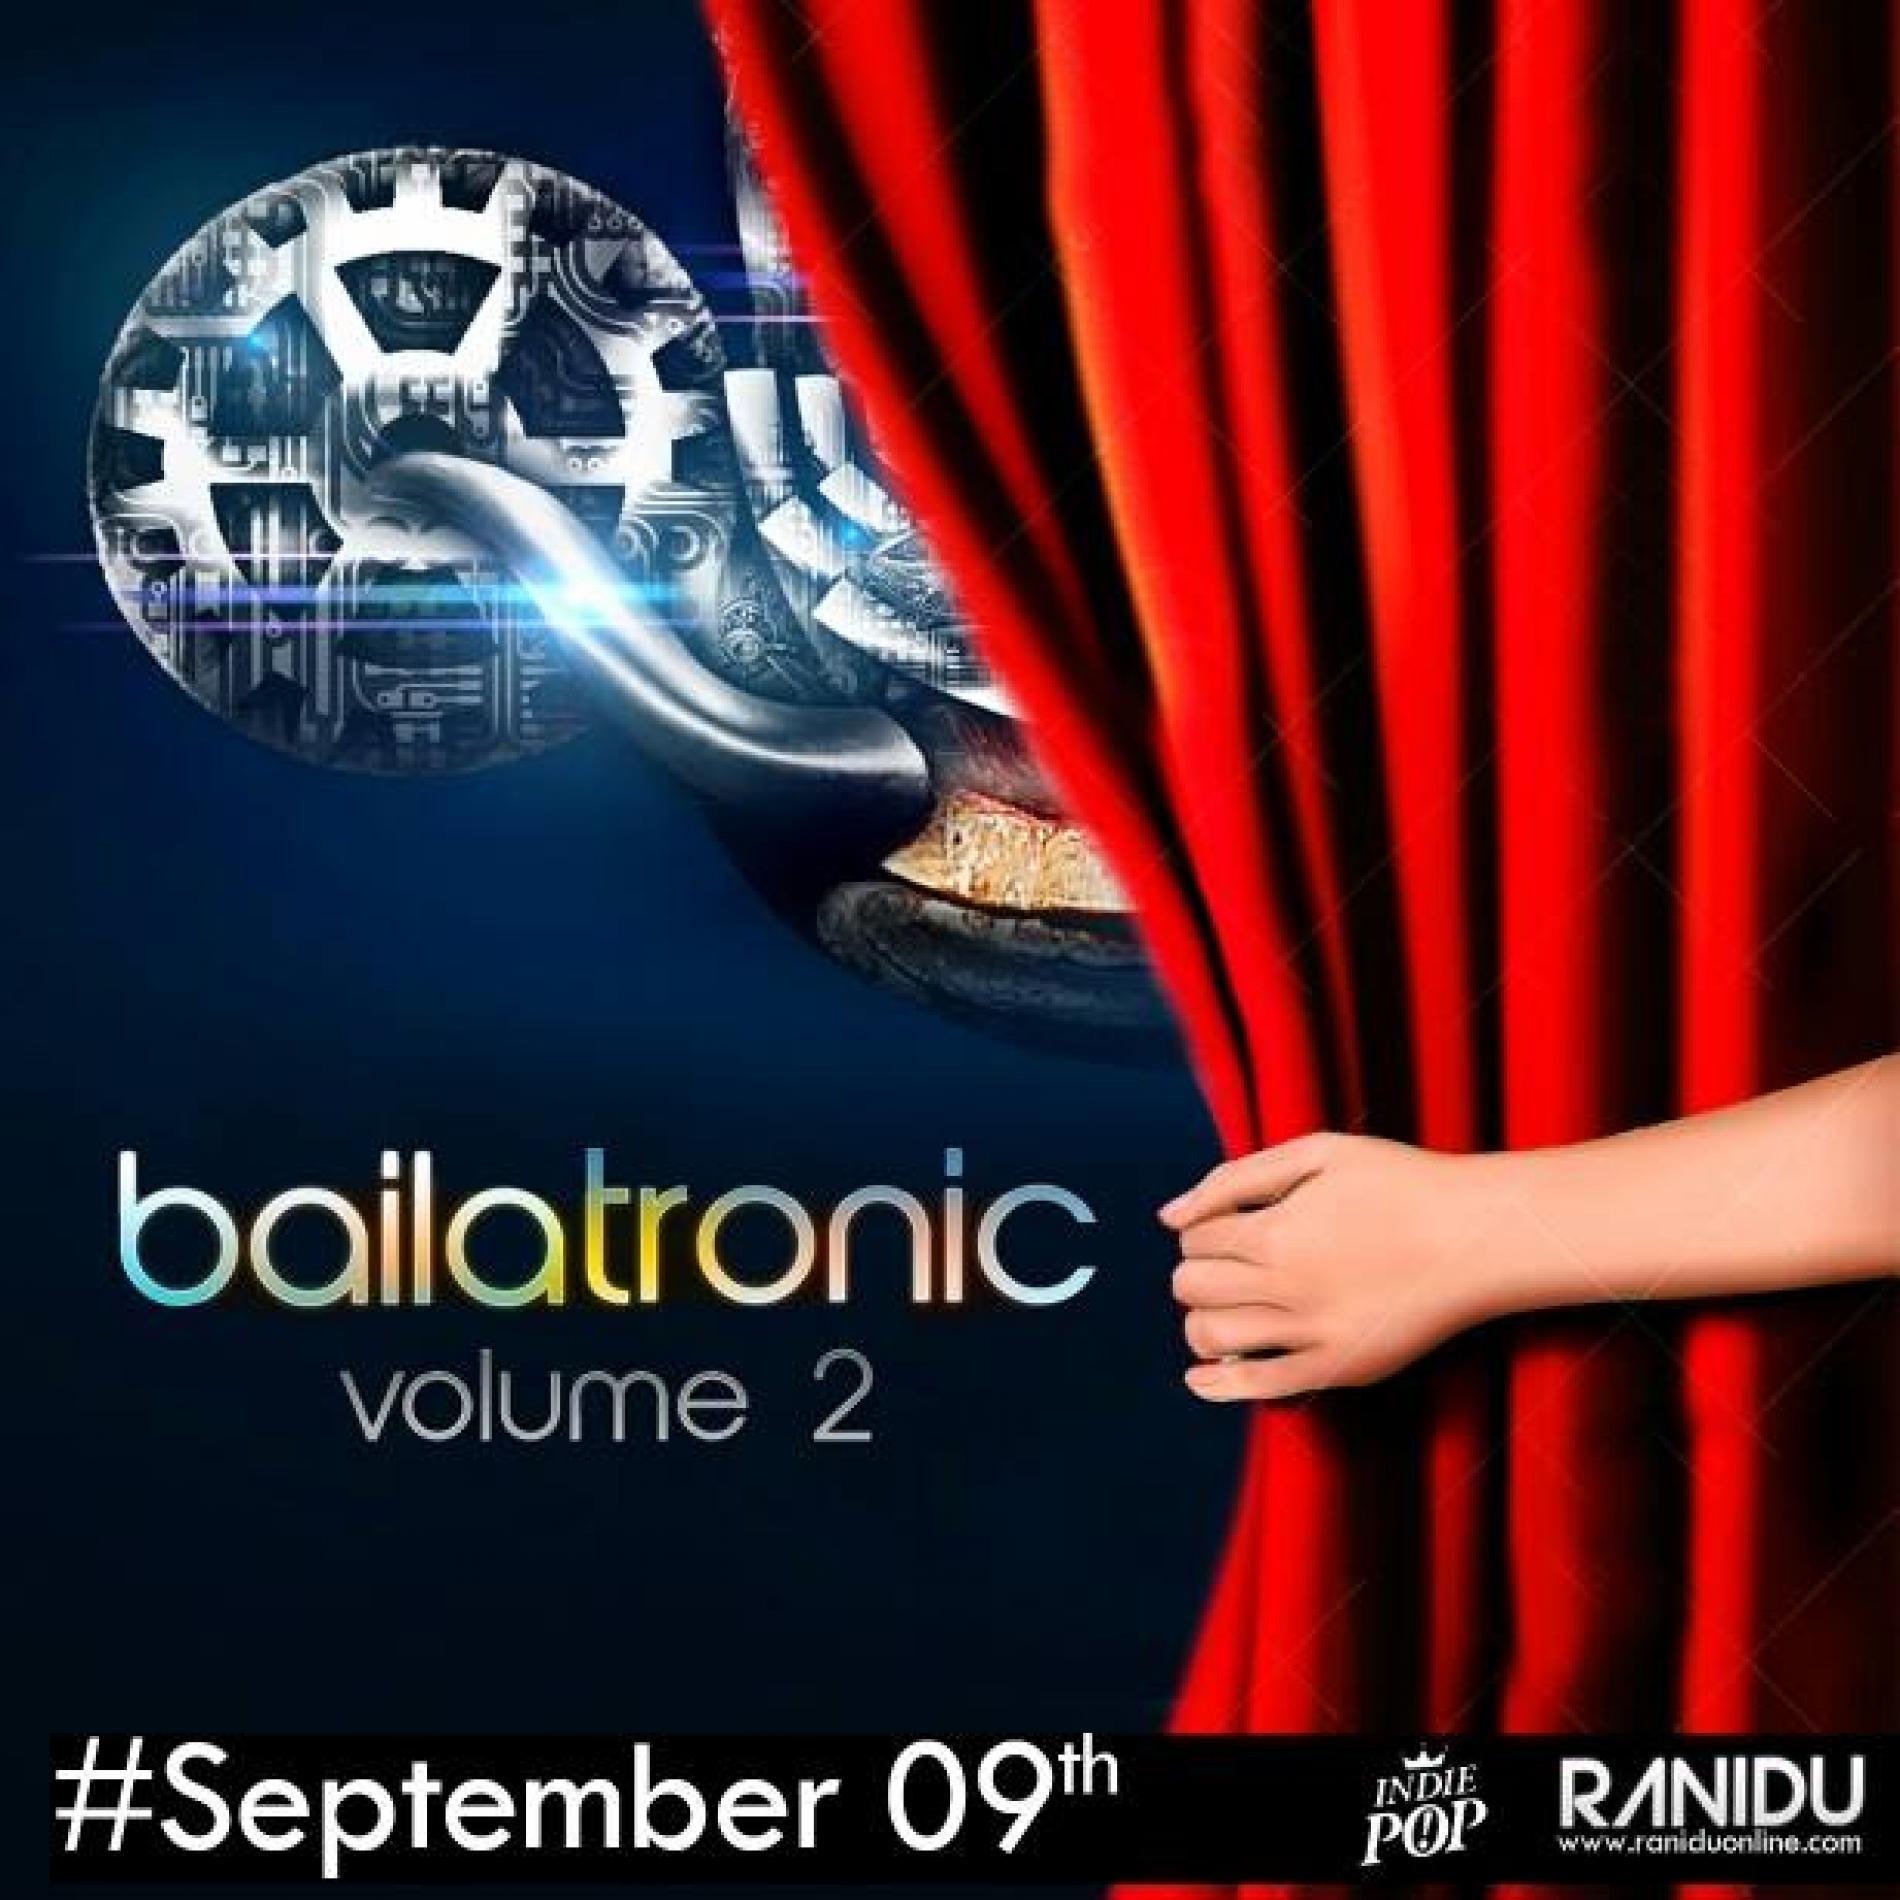 Bailatronic Ep 2 Drops This 9th